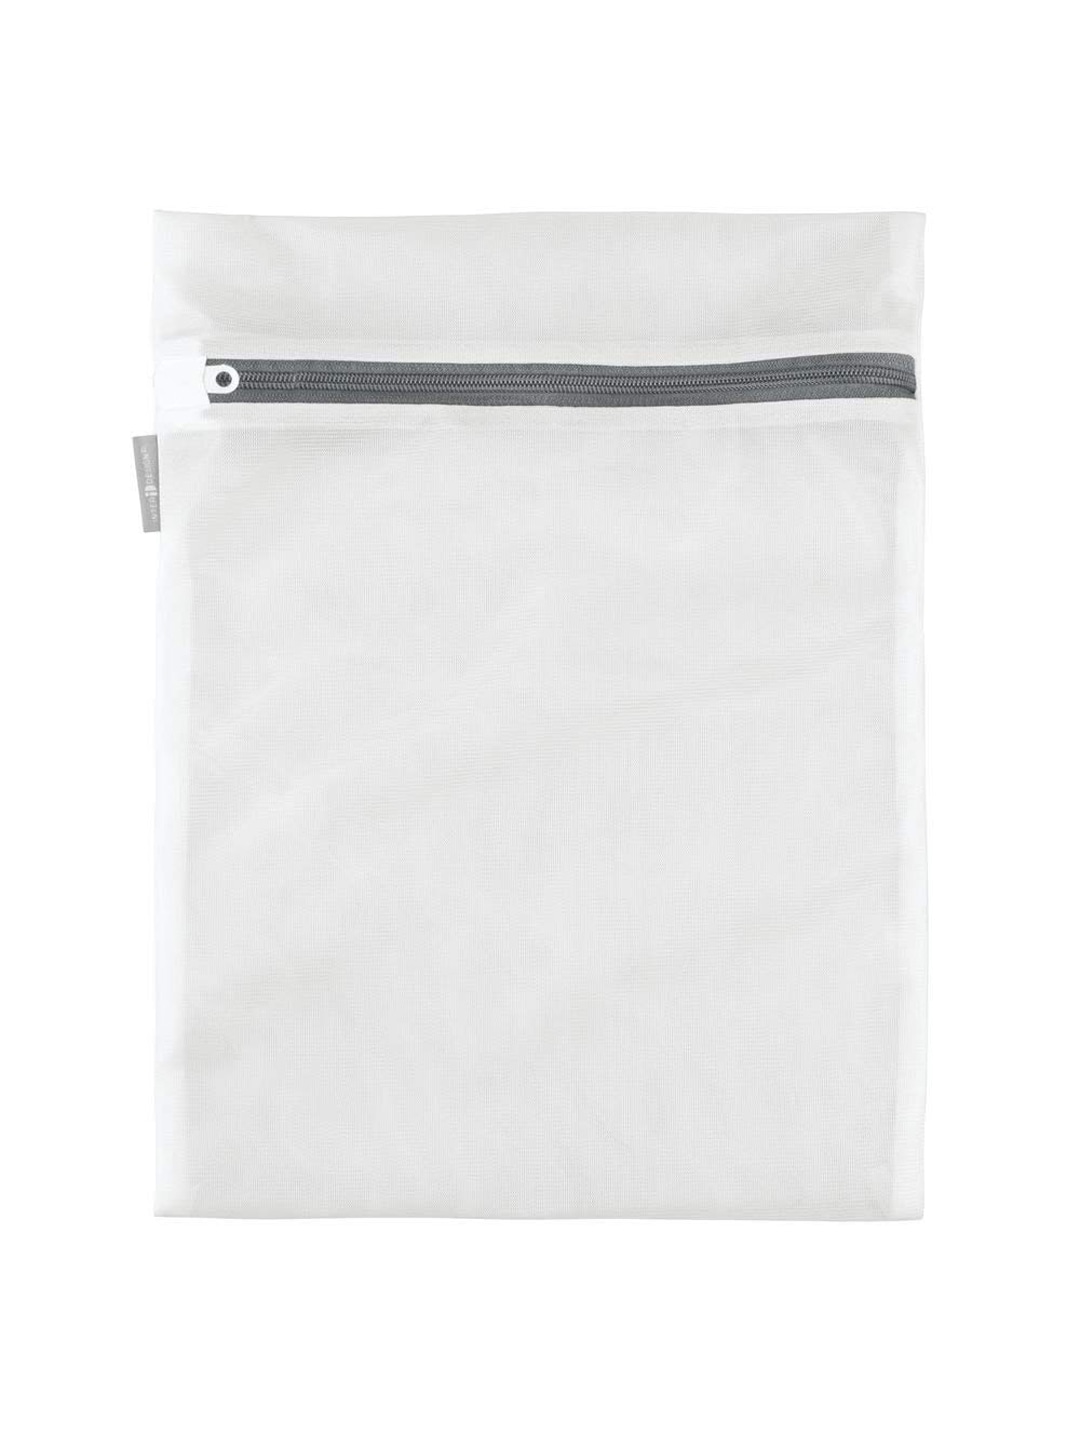 INTERDESIGN Unisex Pack of 2 White Laundry Bags Price in India